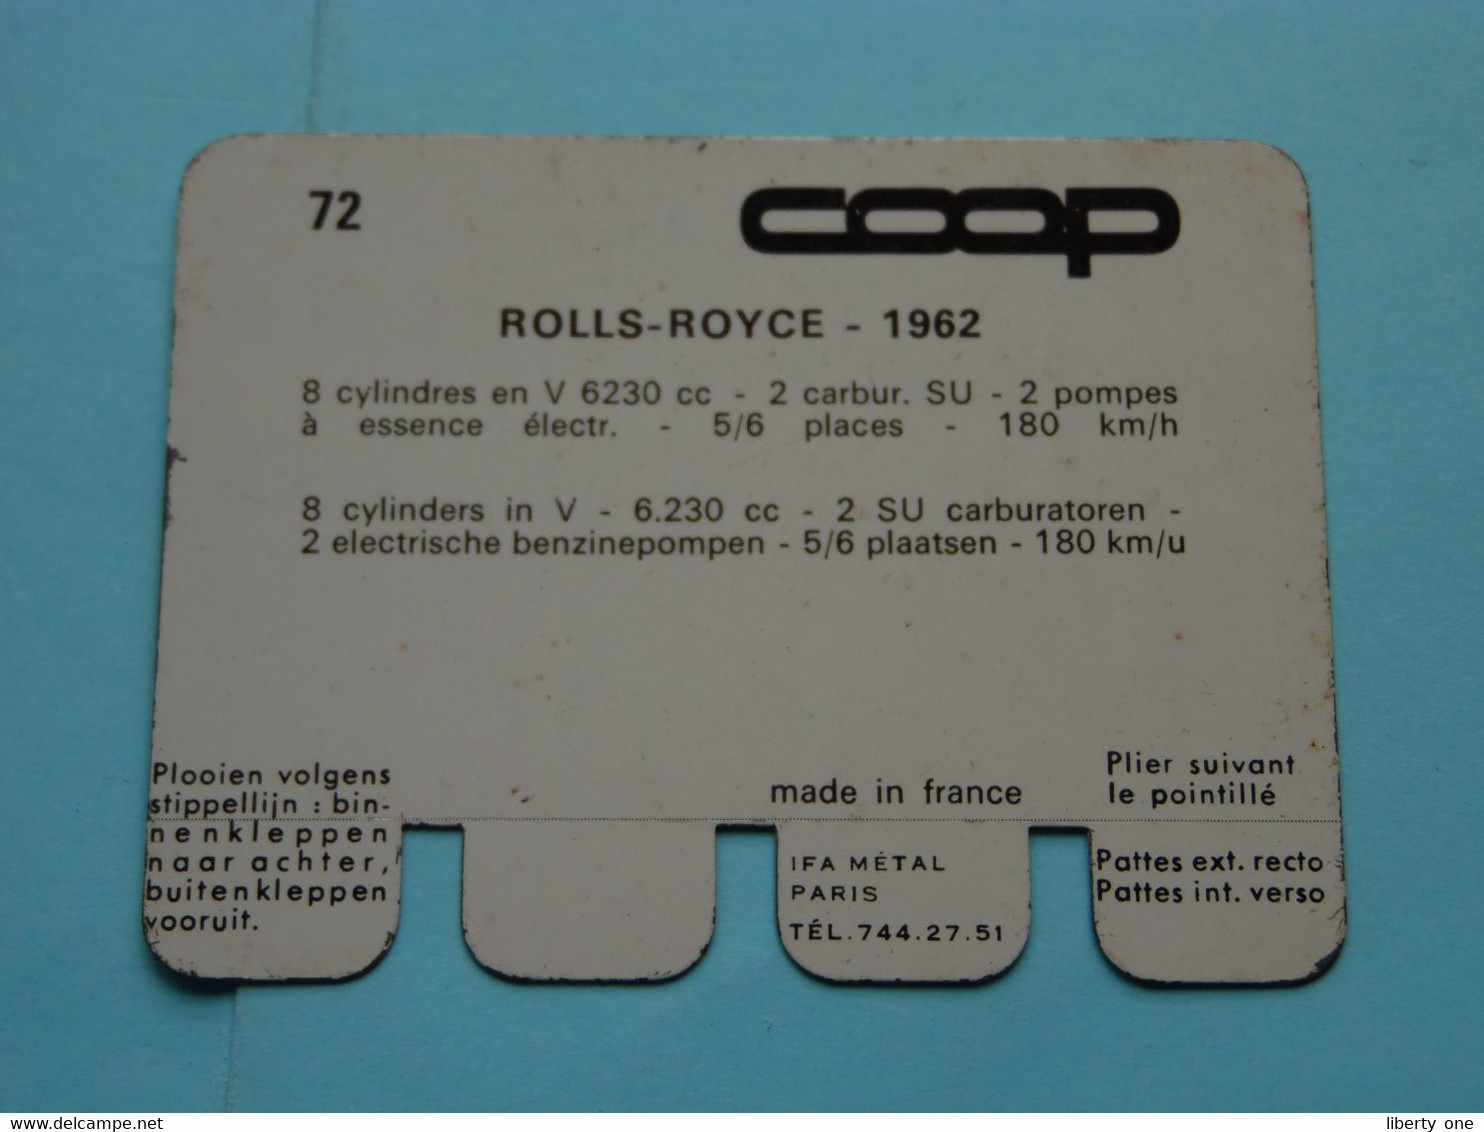 ROLLS-ROYCE - 1962 - Coll. N° 72 NL/FR ( Plaquette C O O P - Voir Photo - IFA Metal Paris ) ! - Tin Signs (after1960)